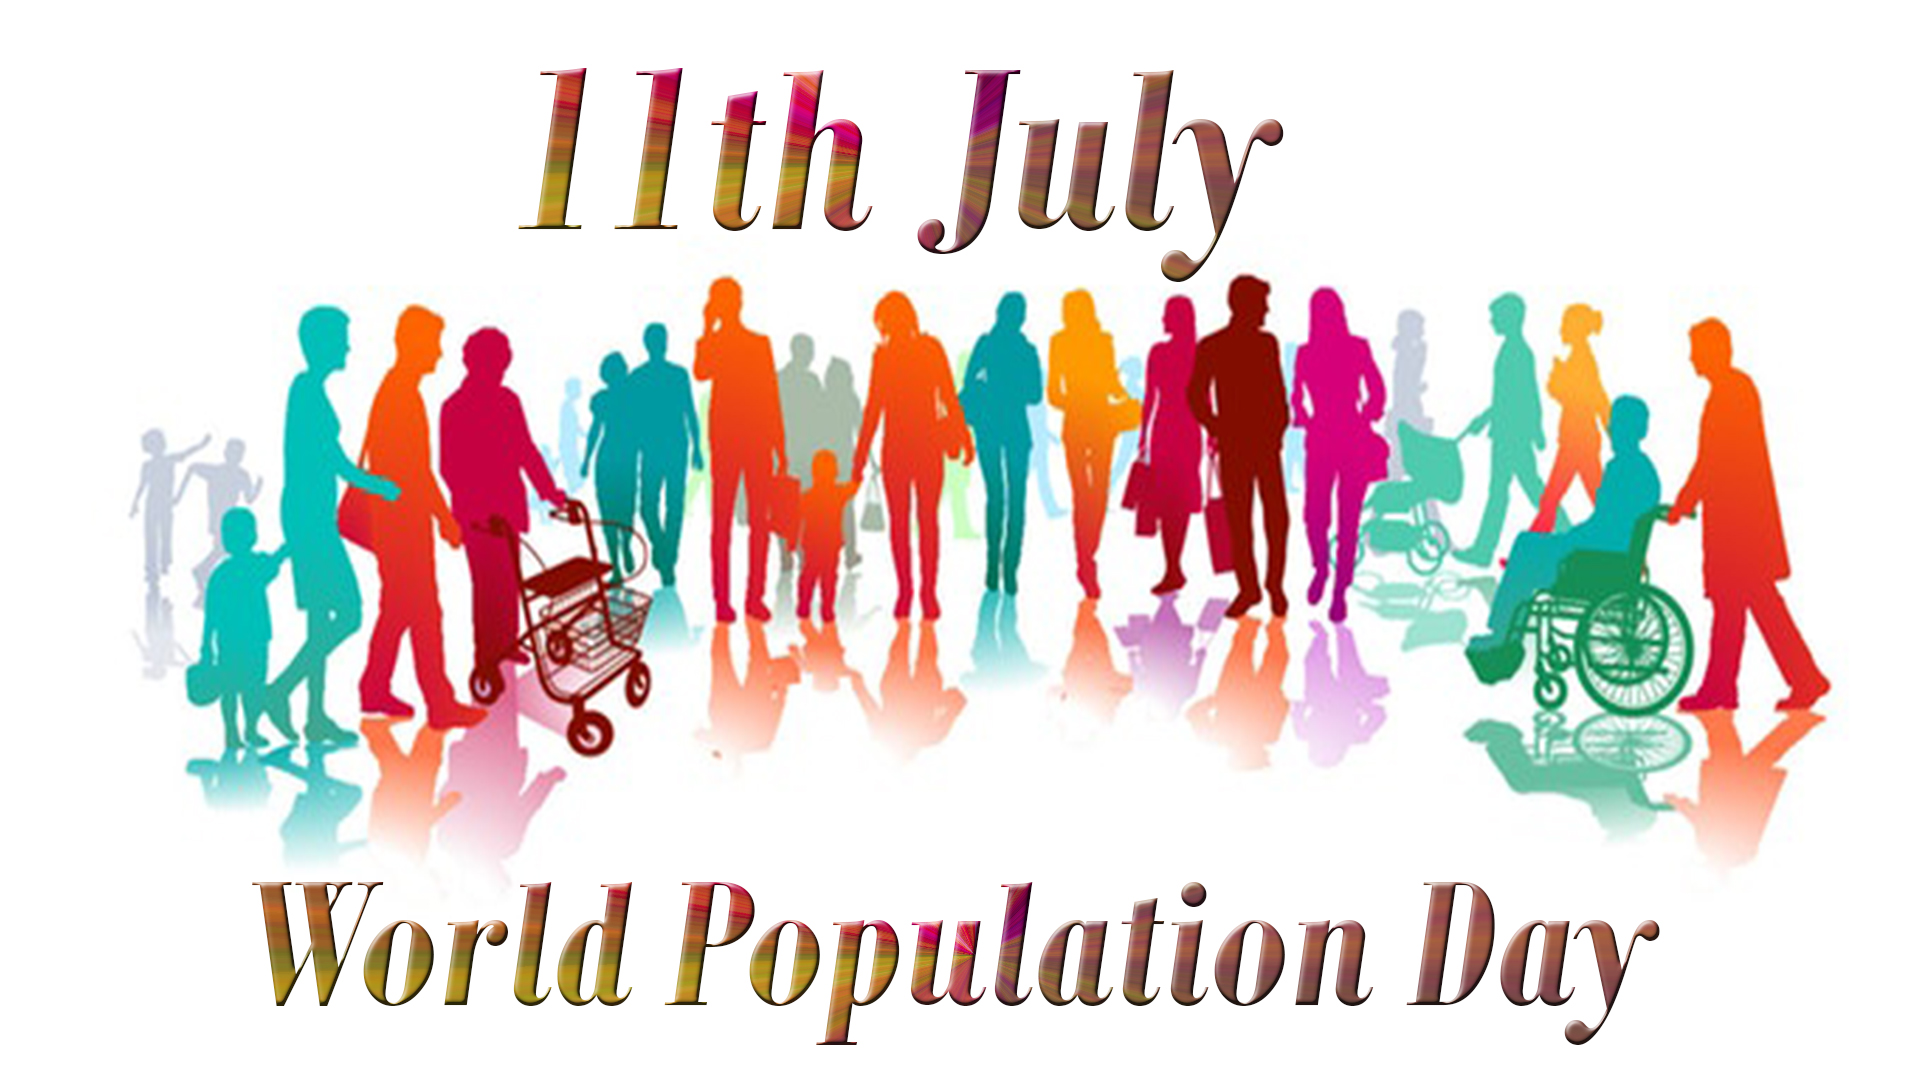 world population day 2018 image